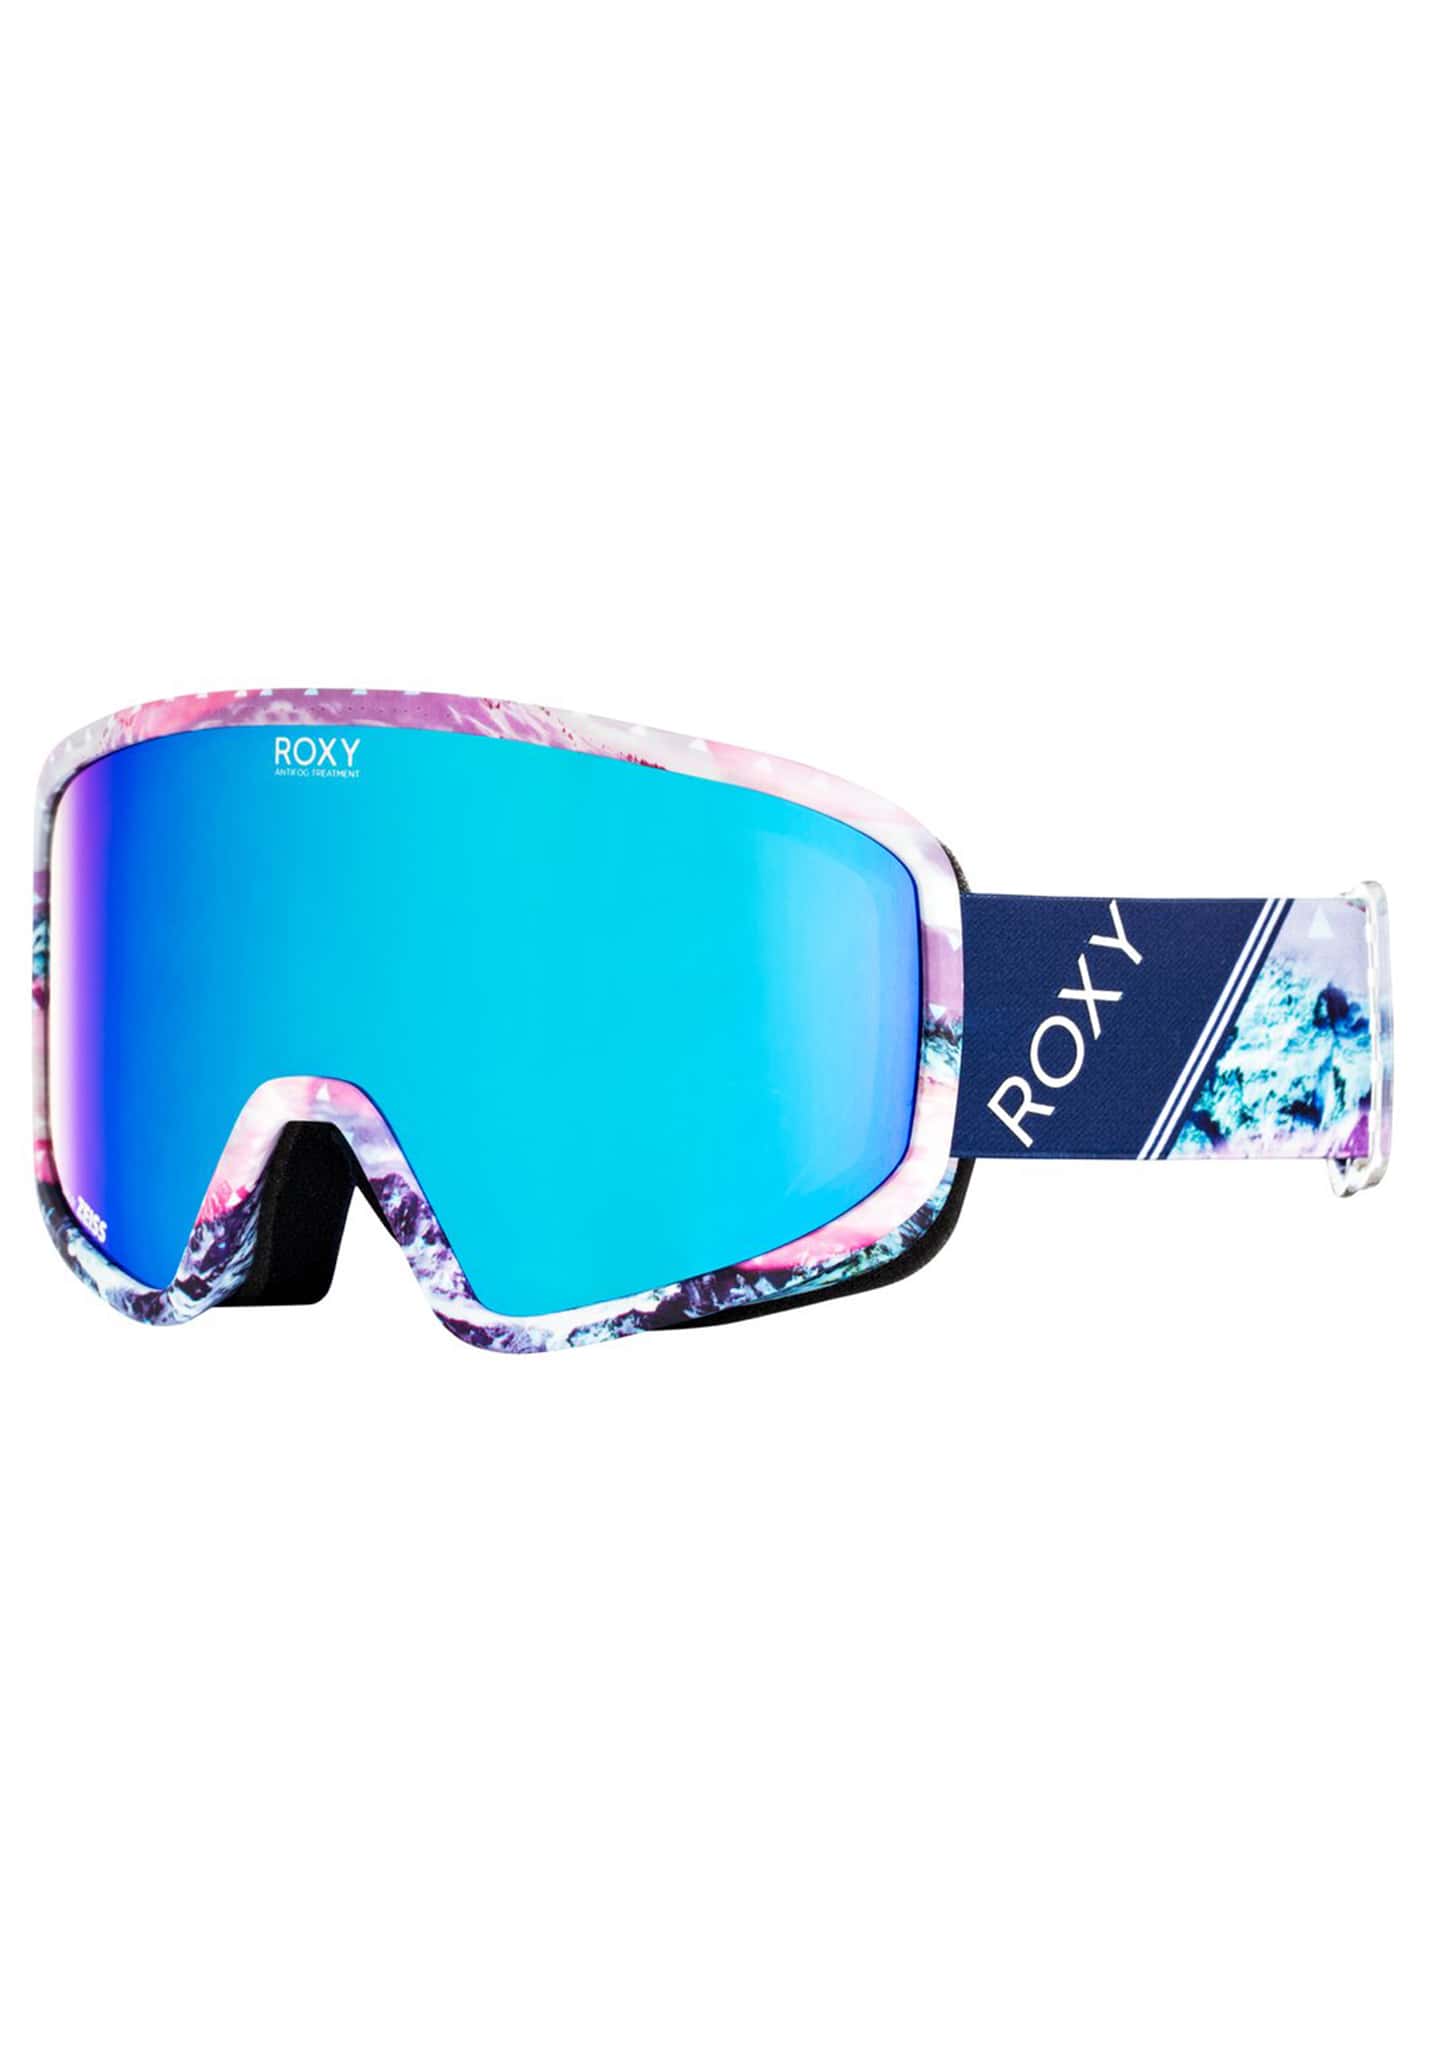 Roxy Feenity Snowboardbrillen strahlend weiße pyrennes One Size